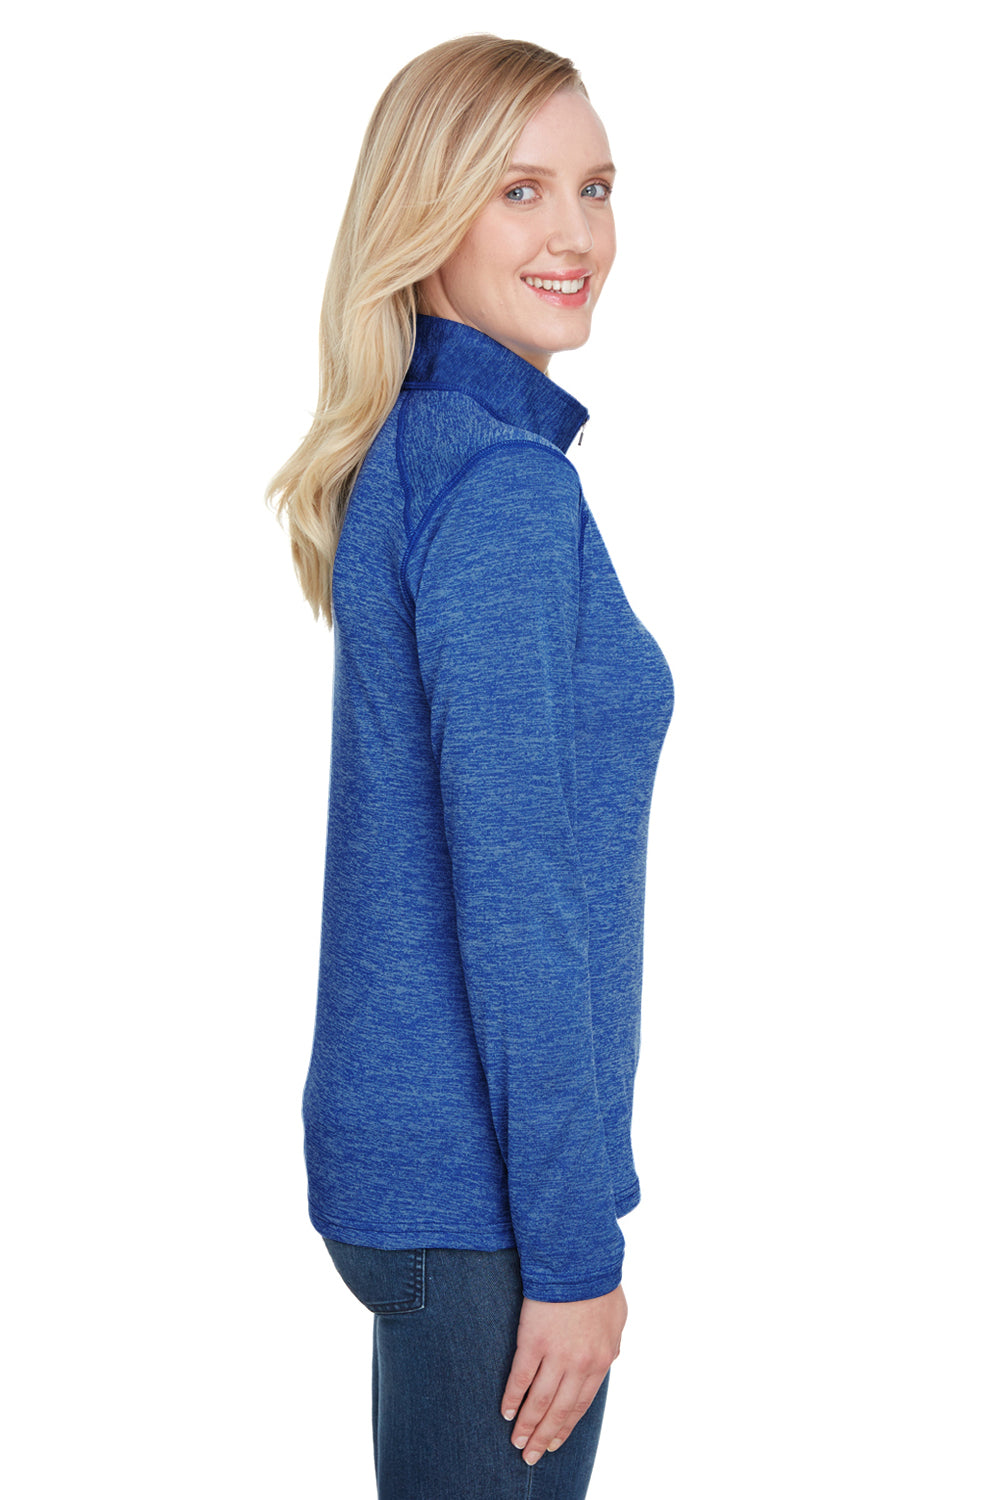 A4 NW4010 Womens Tonal Space Dye Performance Moisture Wicking 1/4 Zip Sweatshirt Royal Blue Model Side